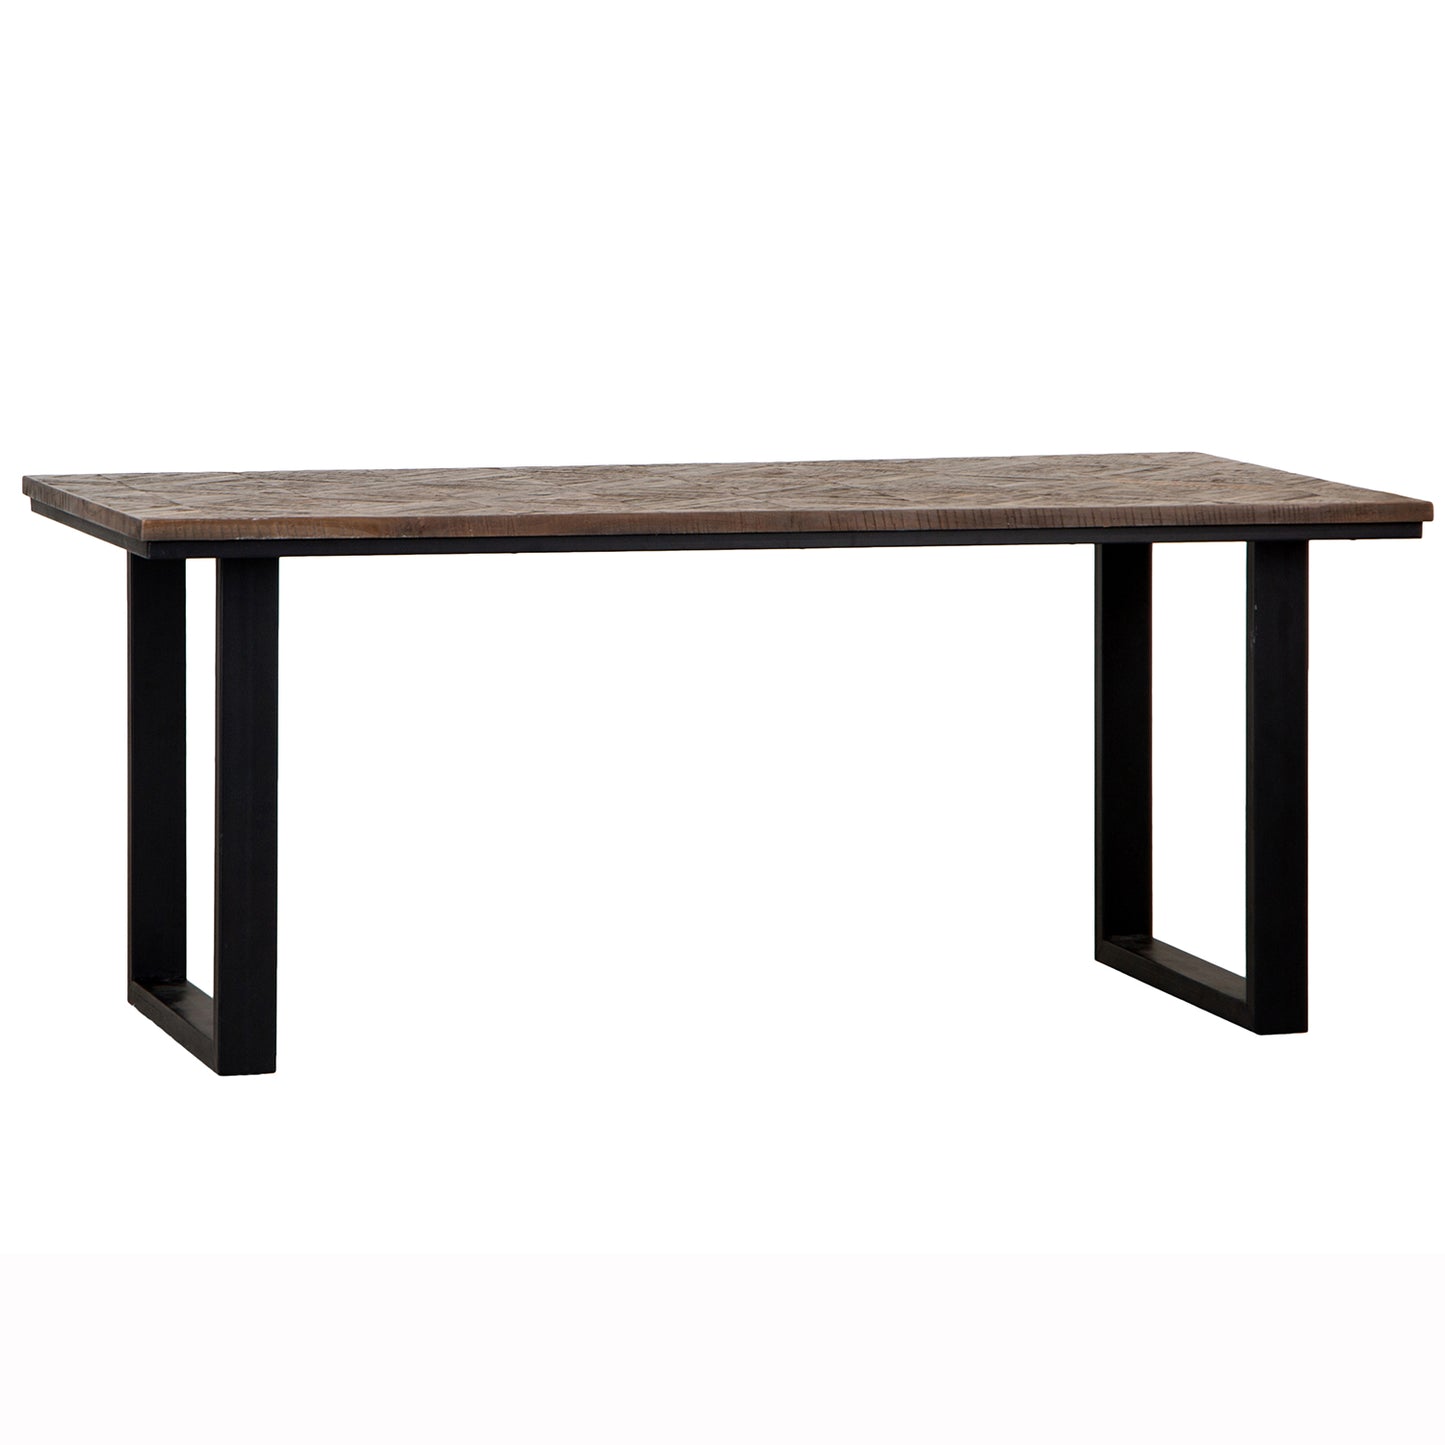 Hengrove - Teak Dining Table - 1.8m